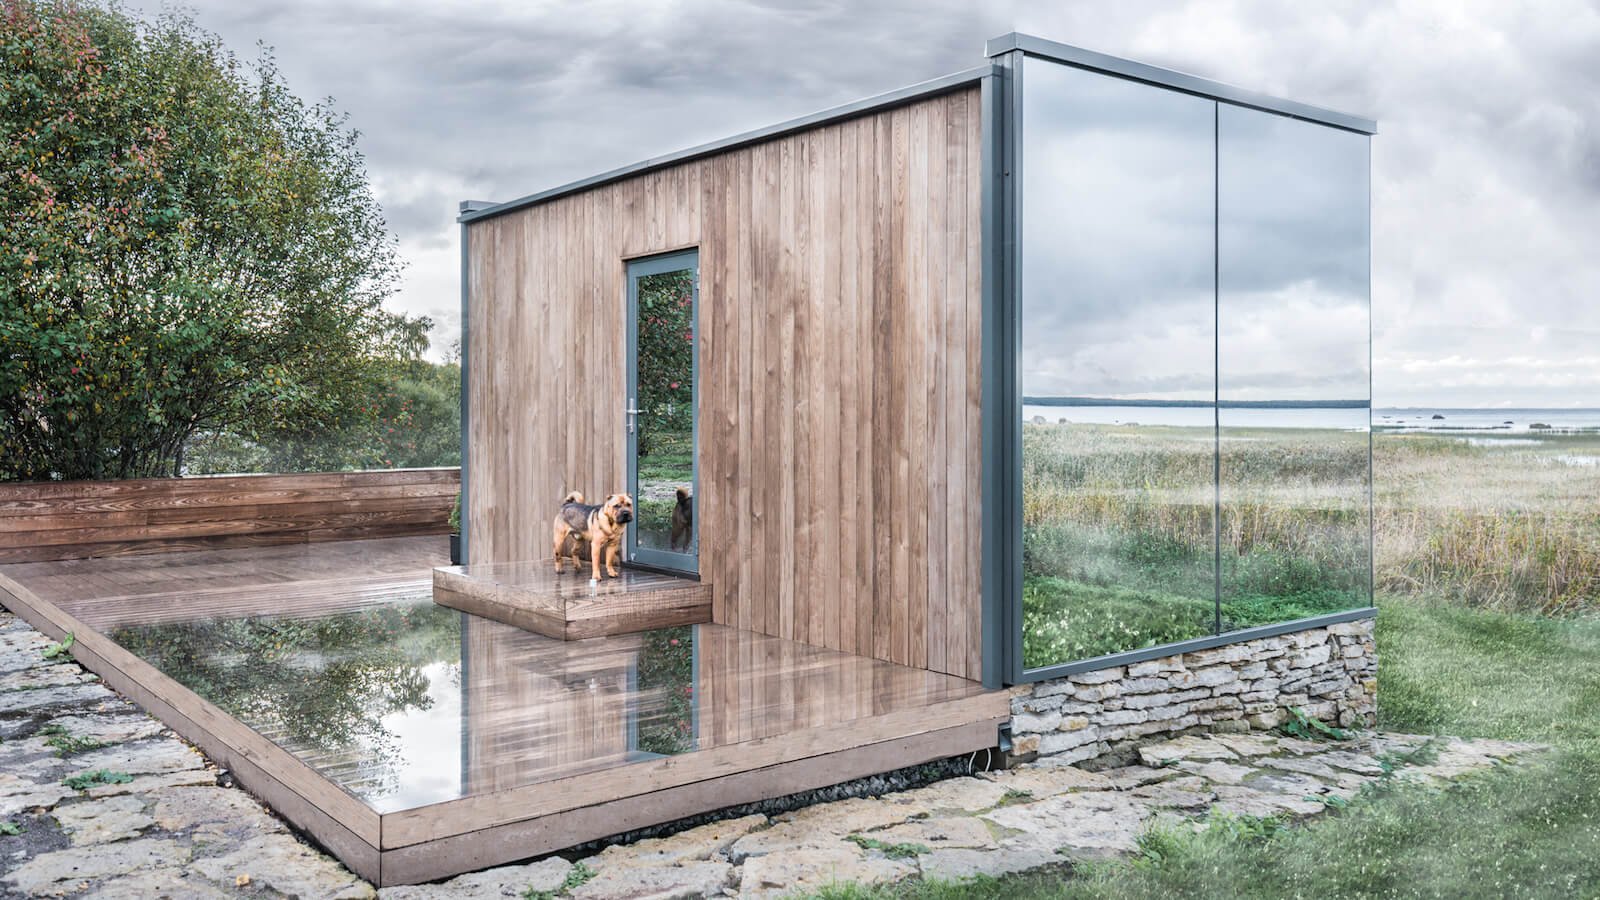 ÖÖD mirrored house creates an extra room in an outdoor space to sleep or work